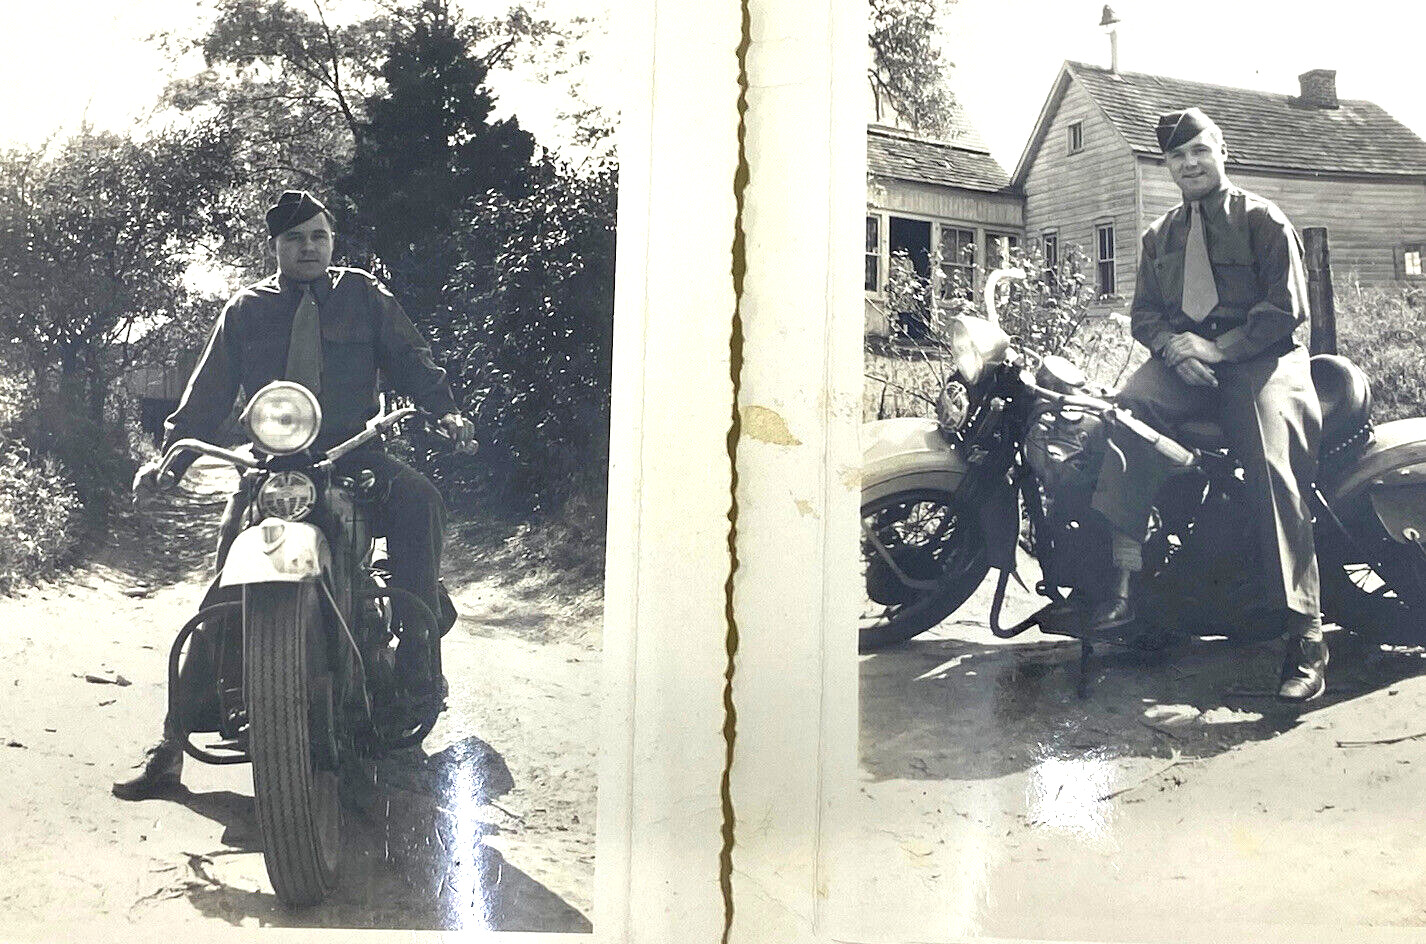 1940s Harley Davidson Military Motorcycle B/w Photographs (2) Original WWII